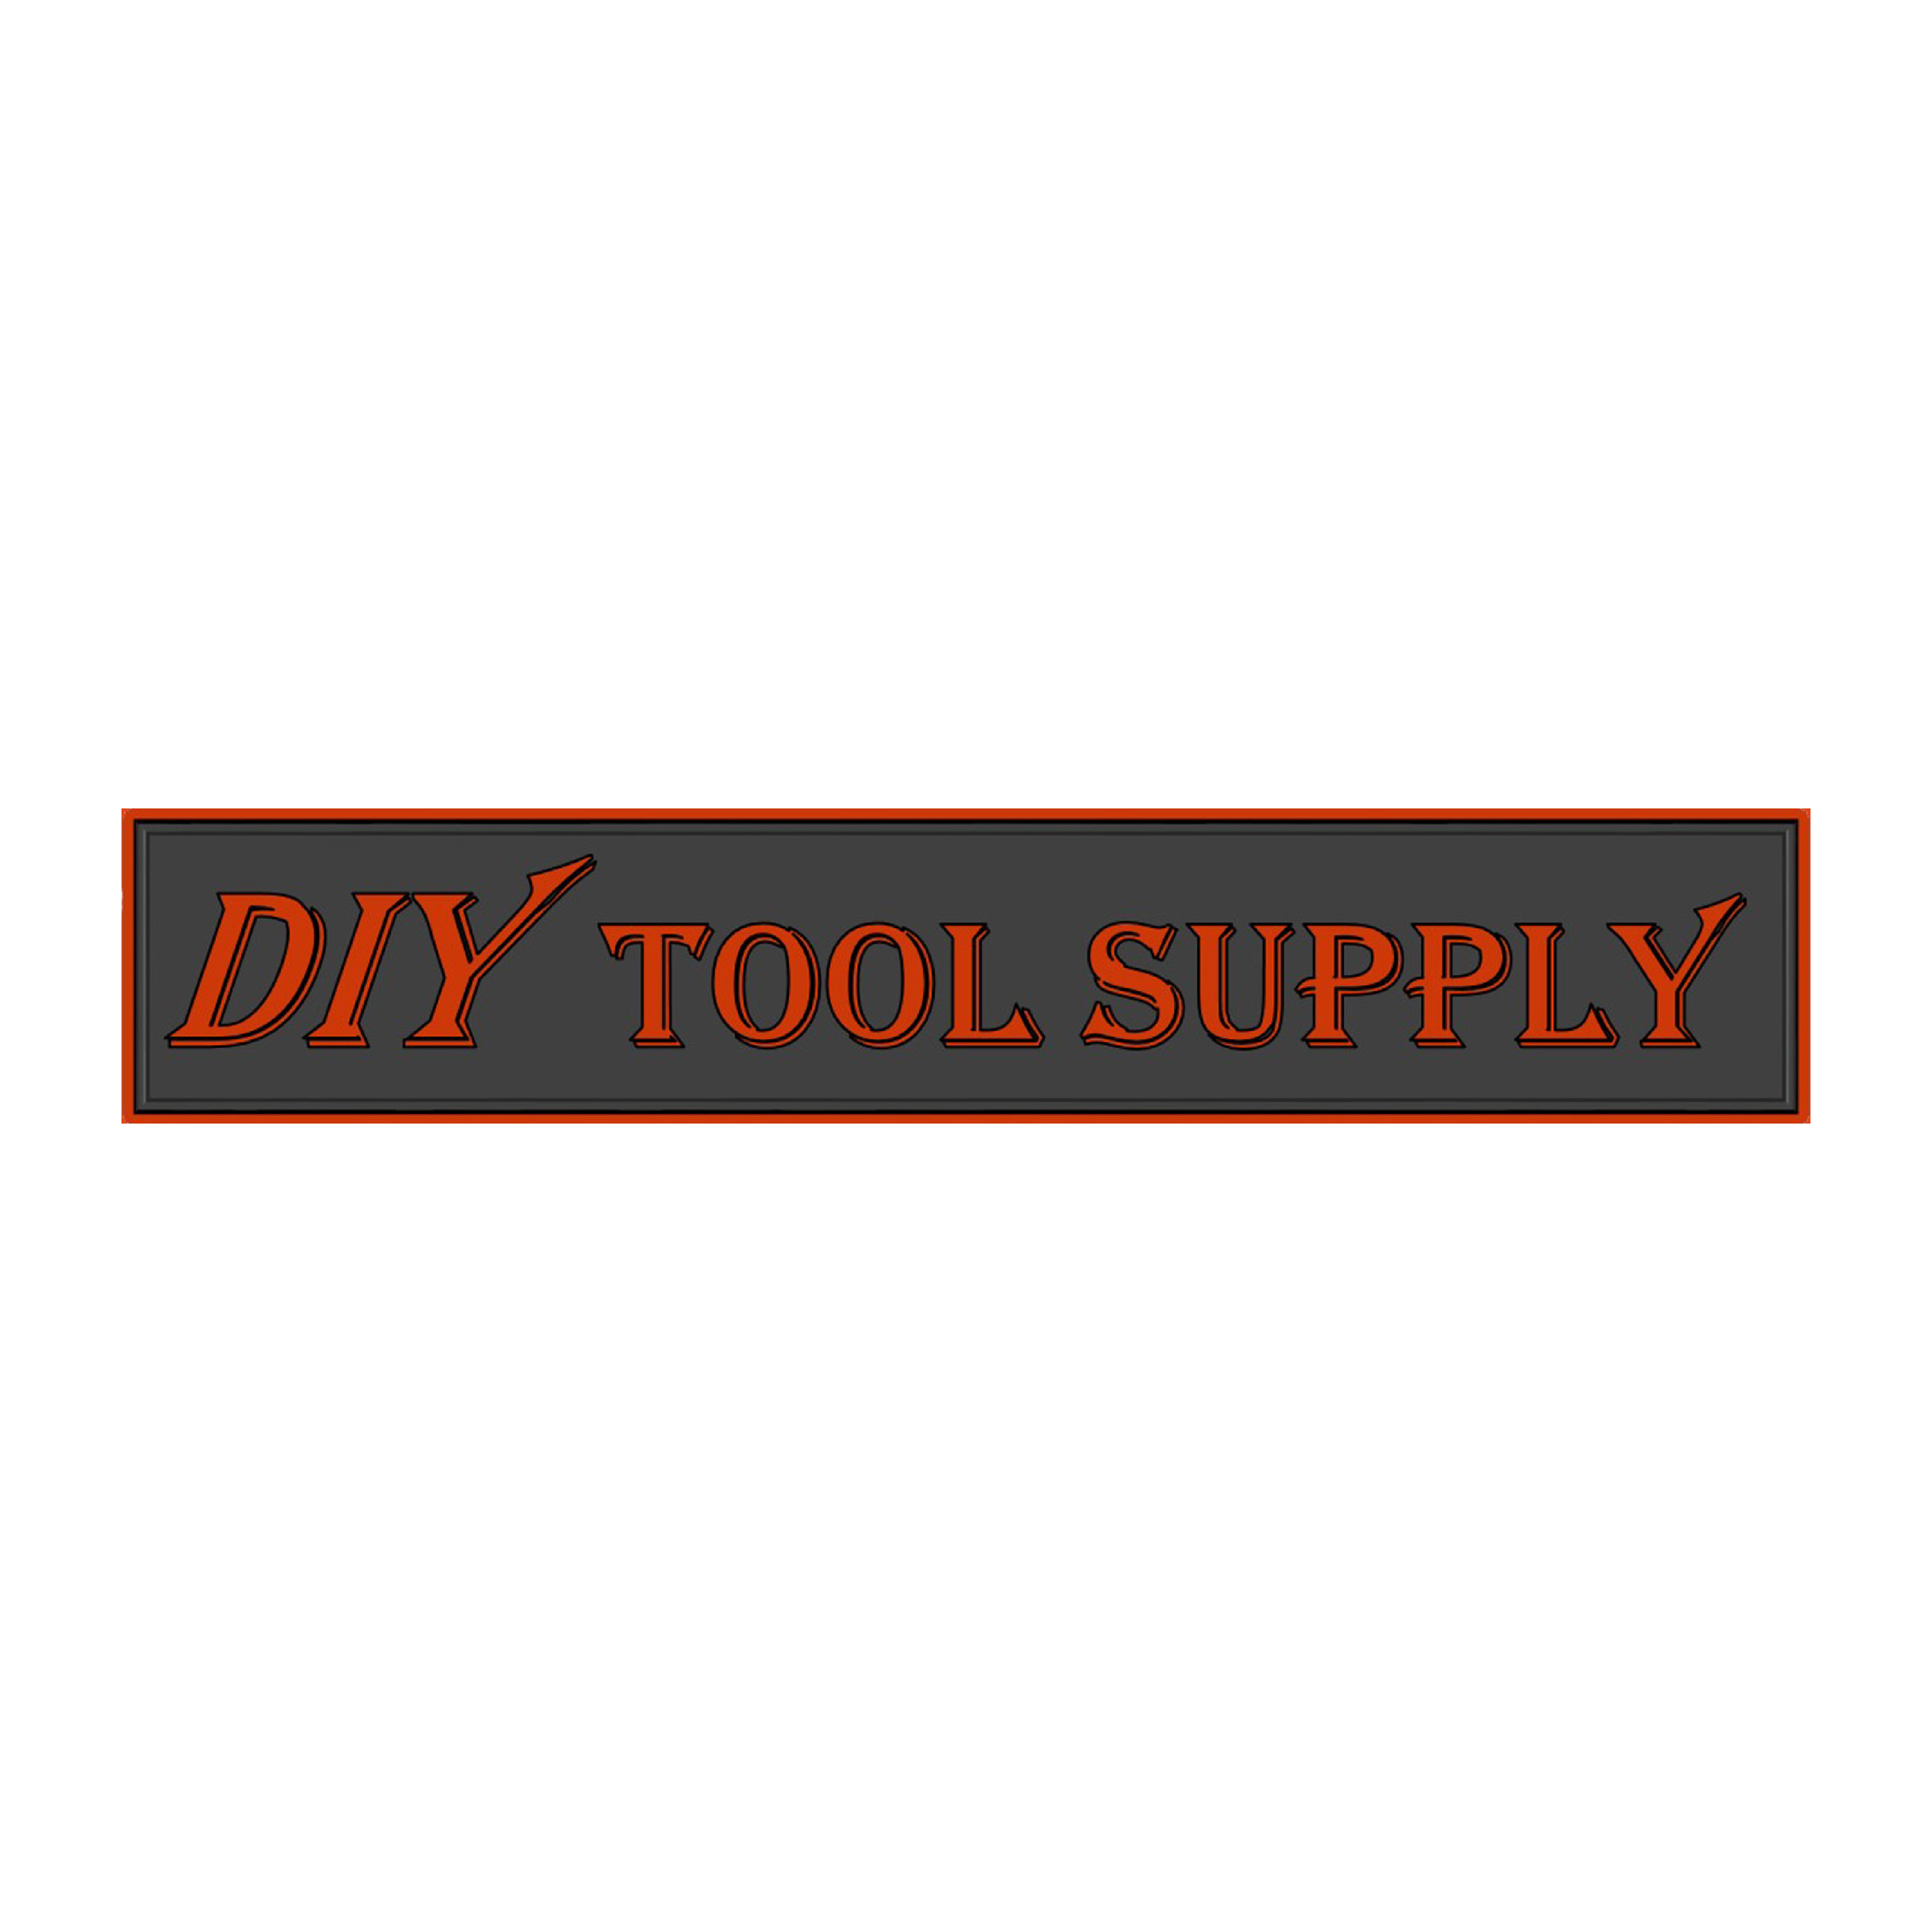 DIY Tool Supply